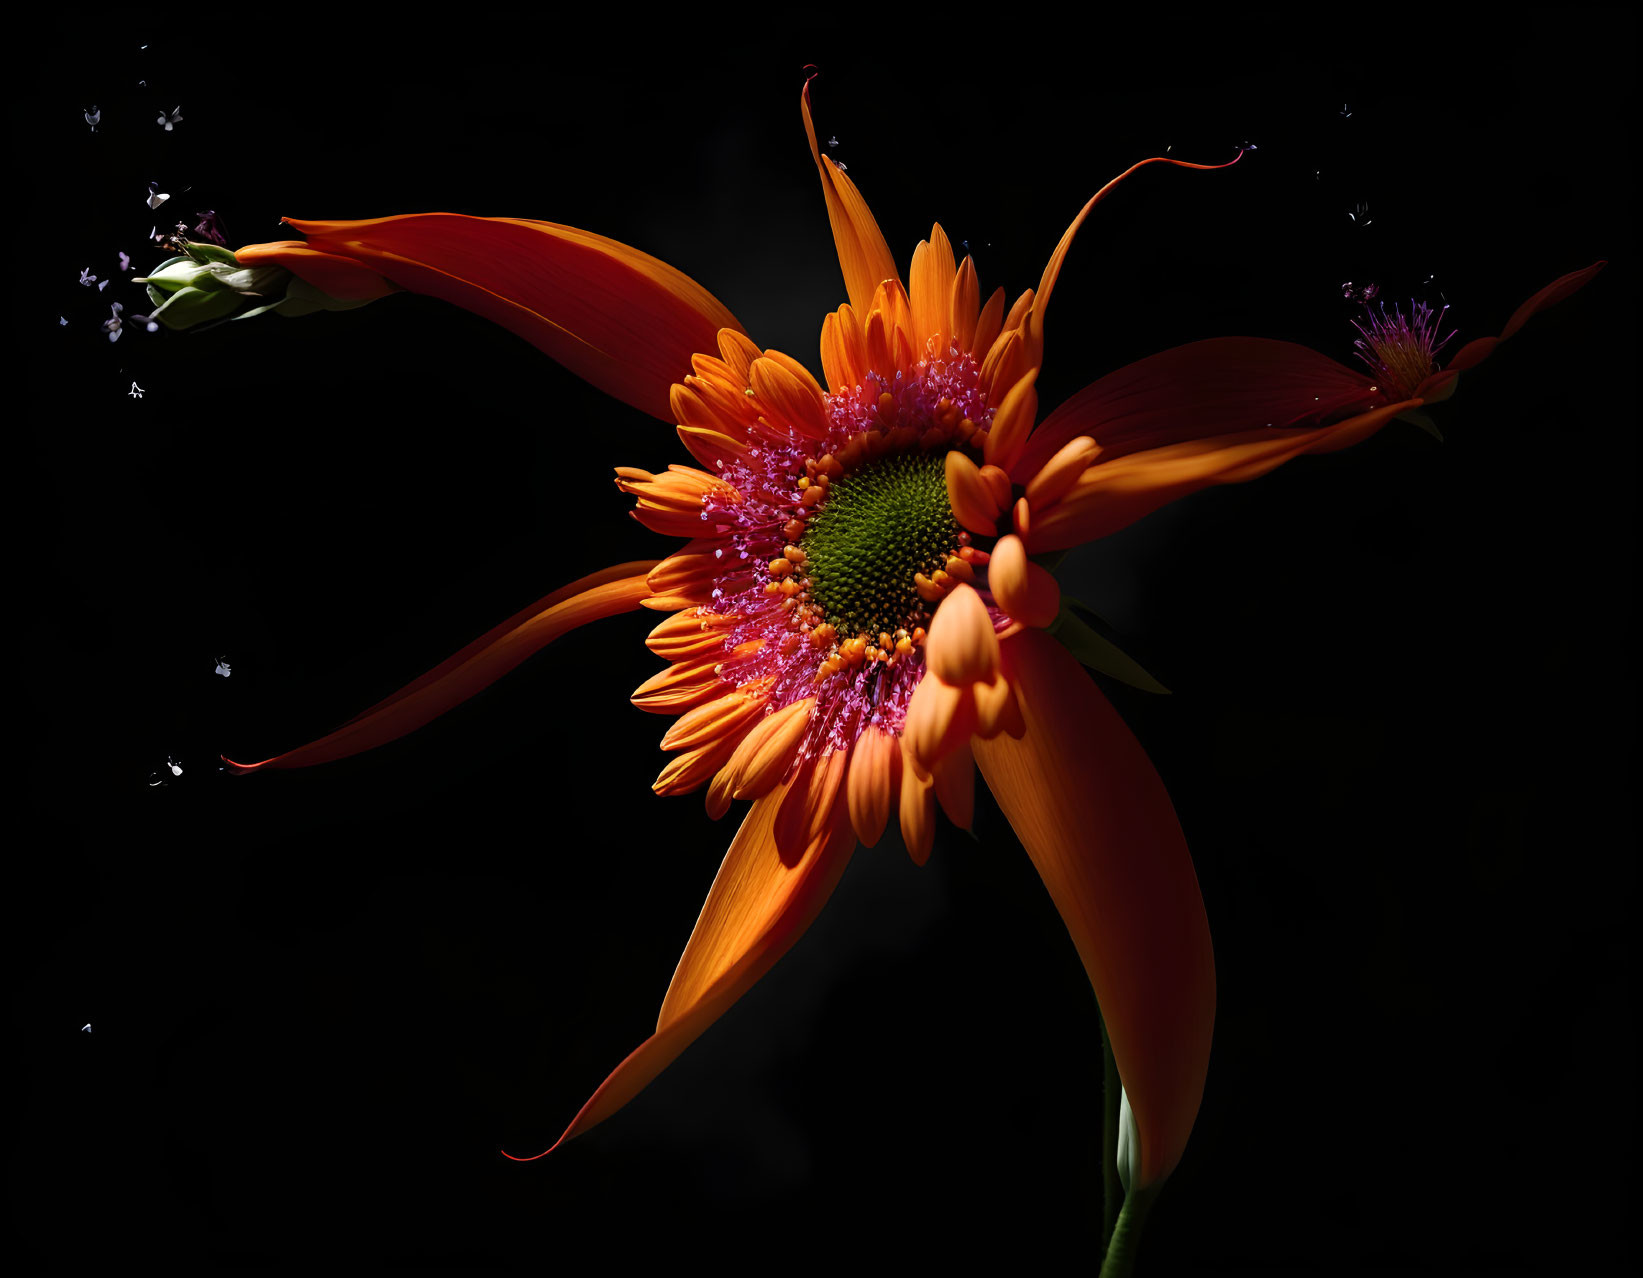 Vibrant Orange Flower with Green Center on Dark Background